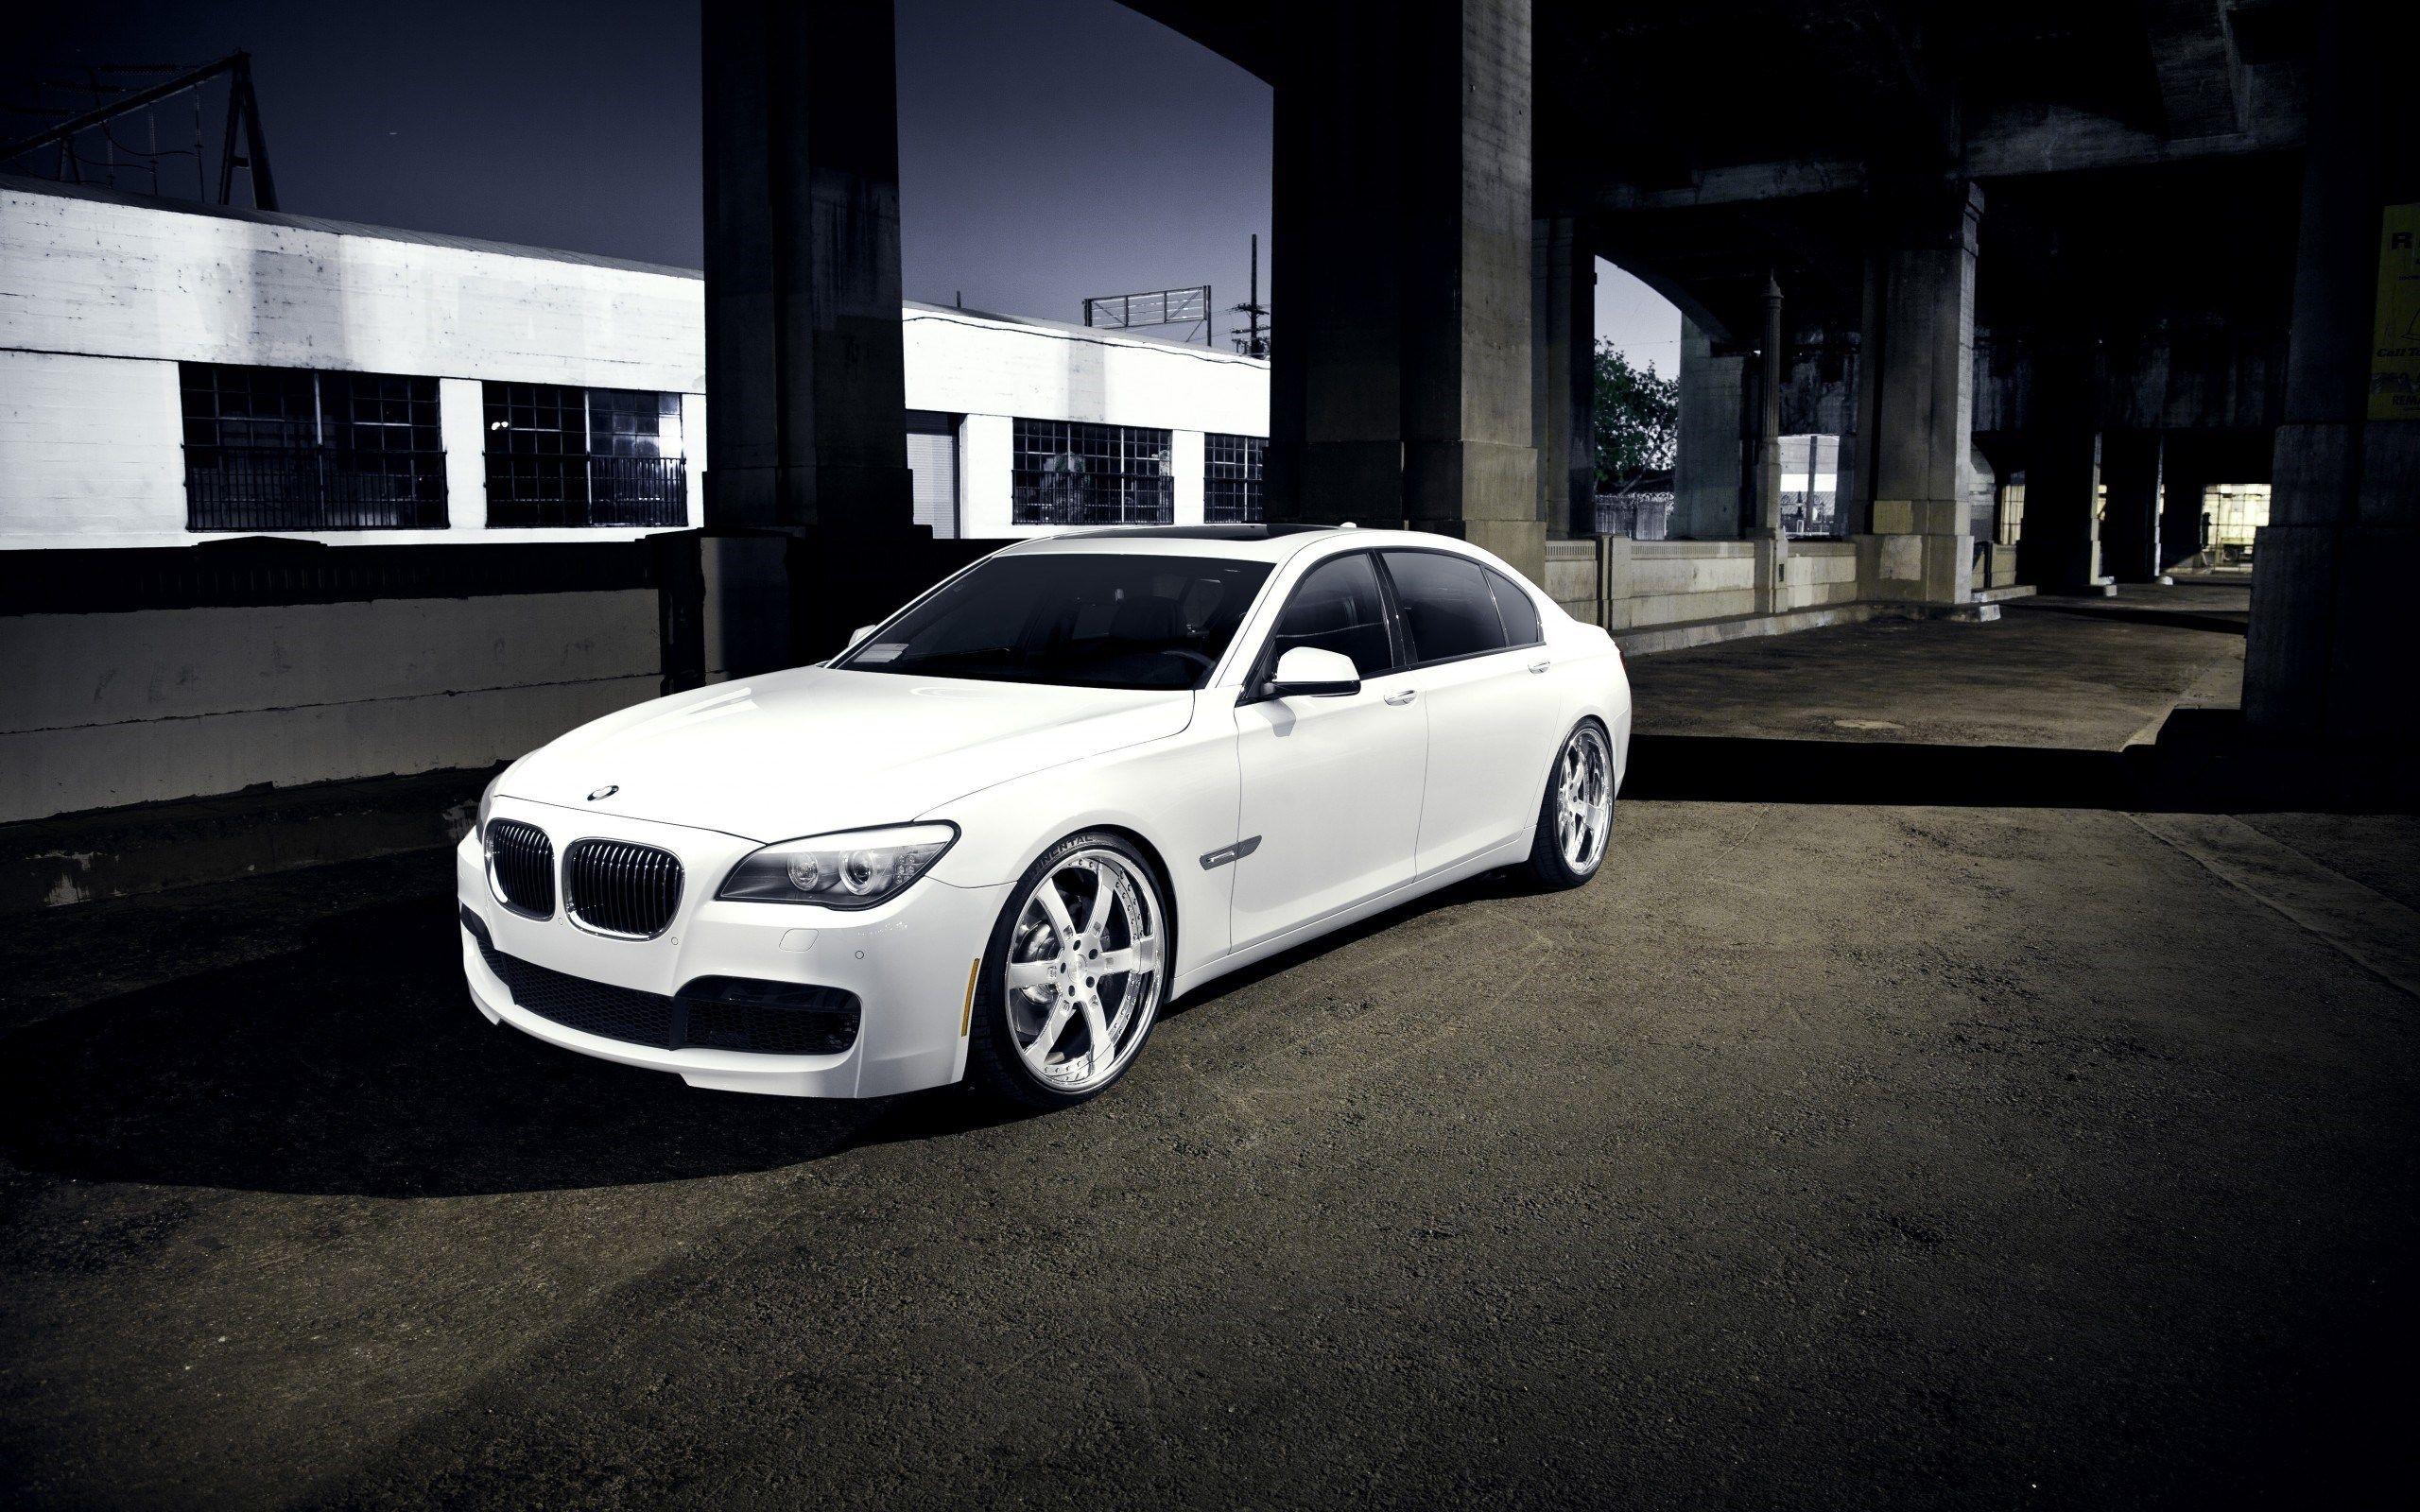 Beautiful White BMW 7 Series Wallpaper 43420 2560x1600 px